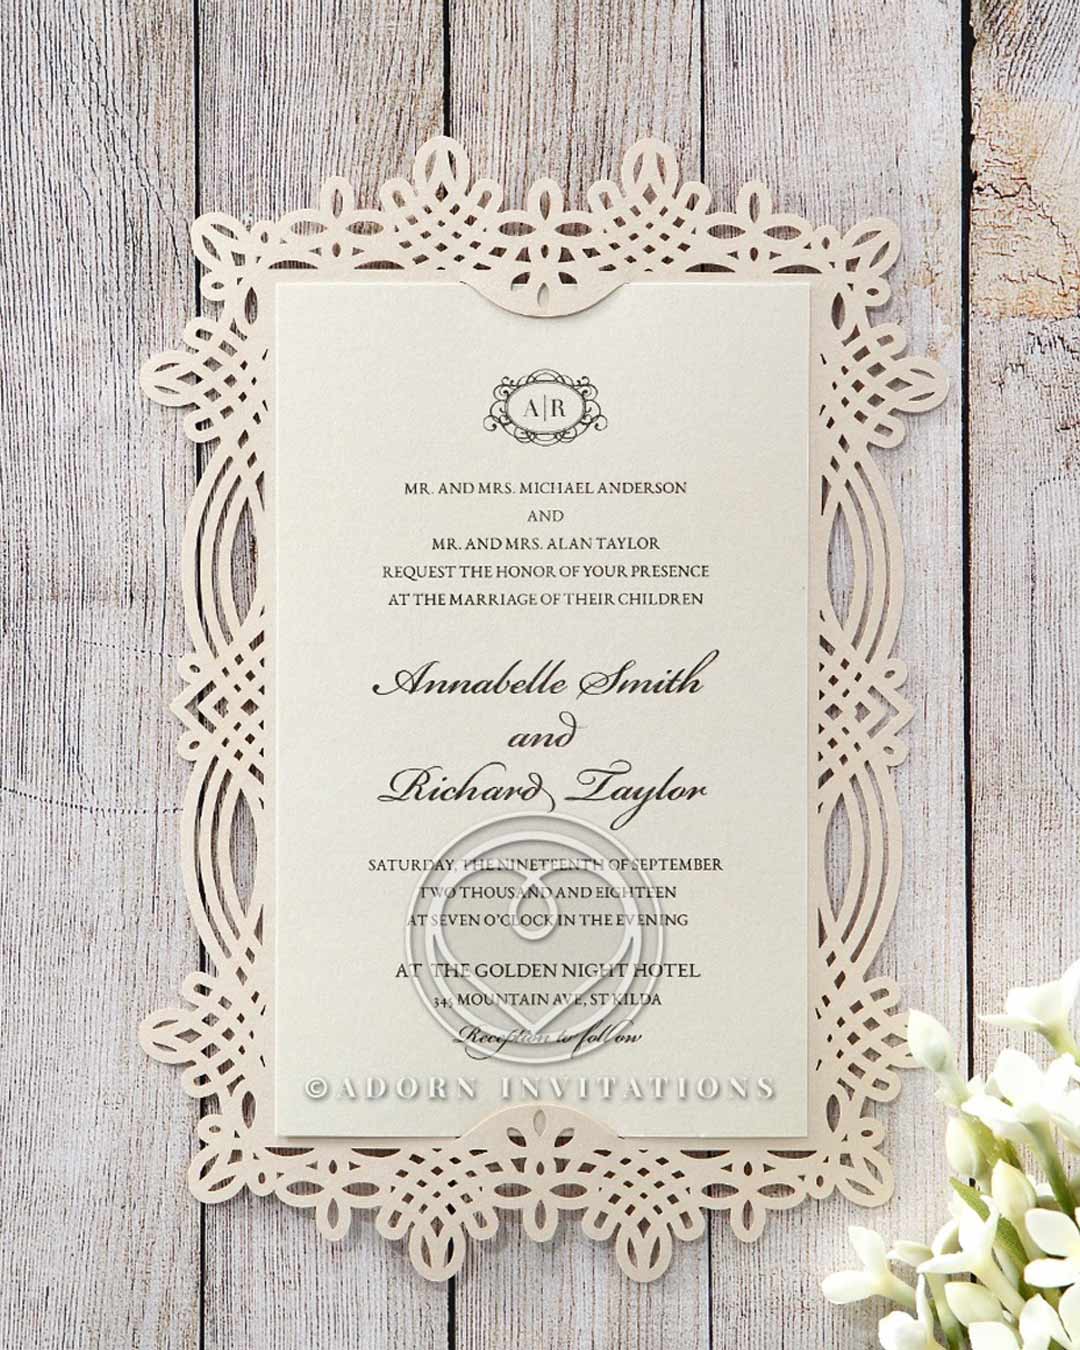 Marriage Invitation Card Wording - Best Design Idea